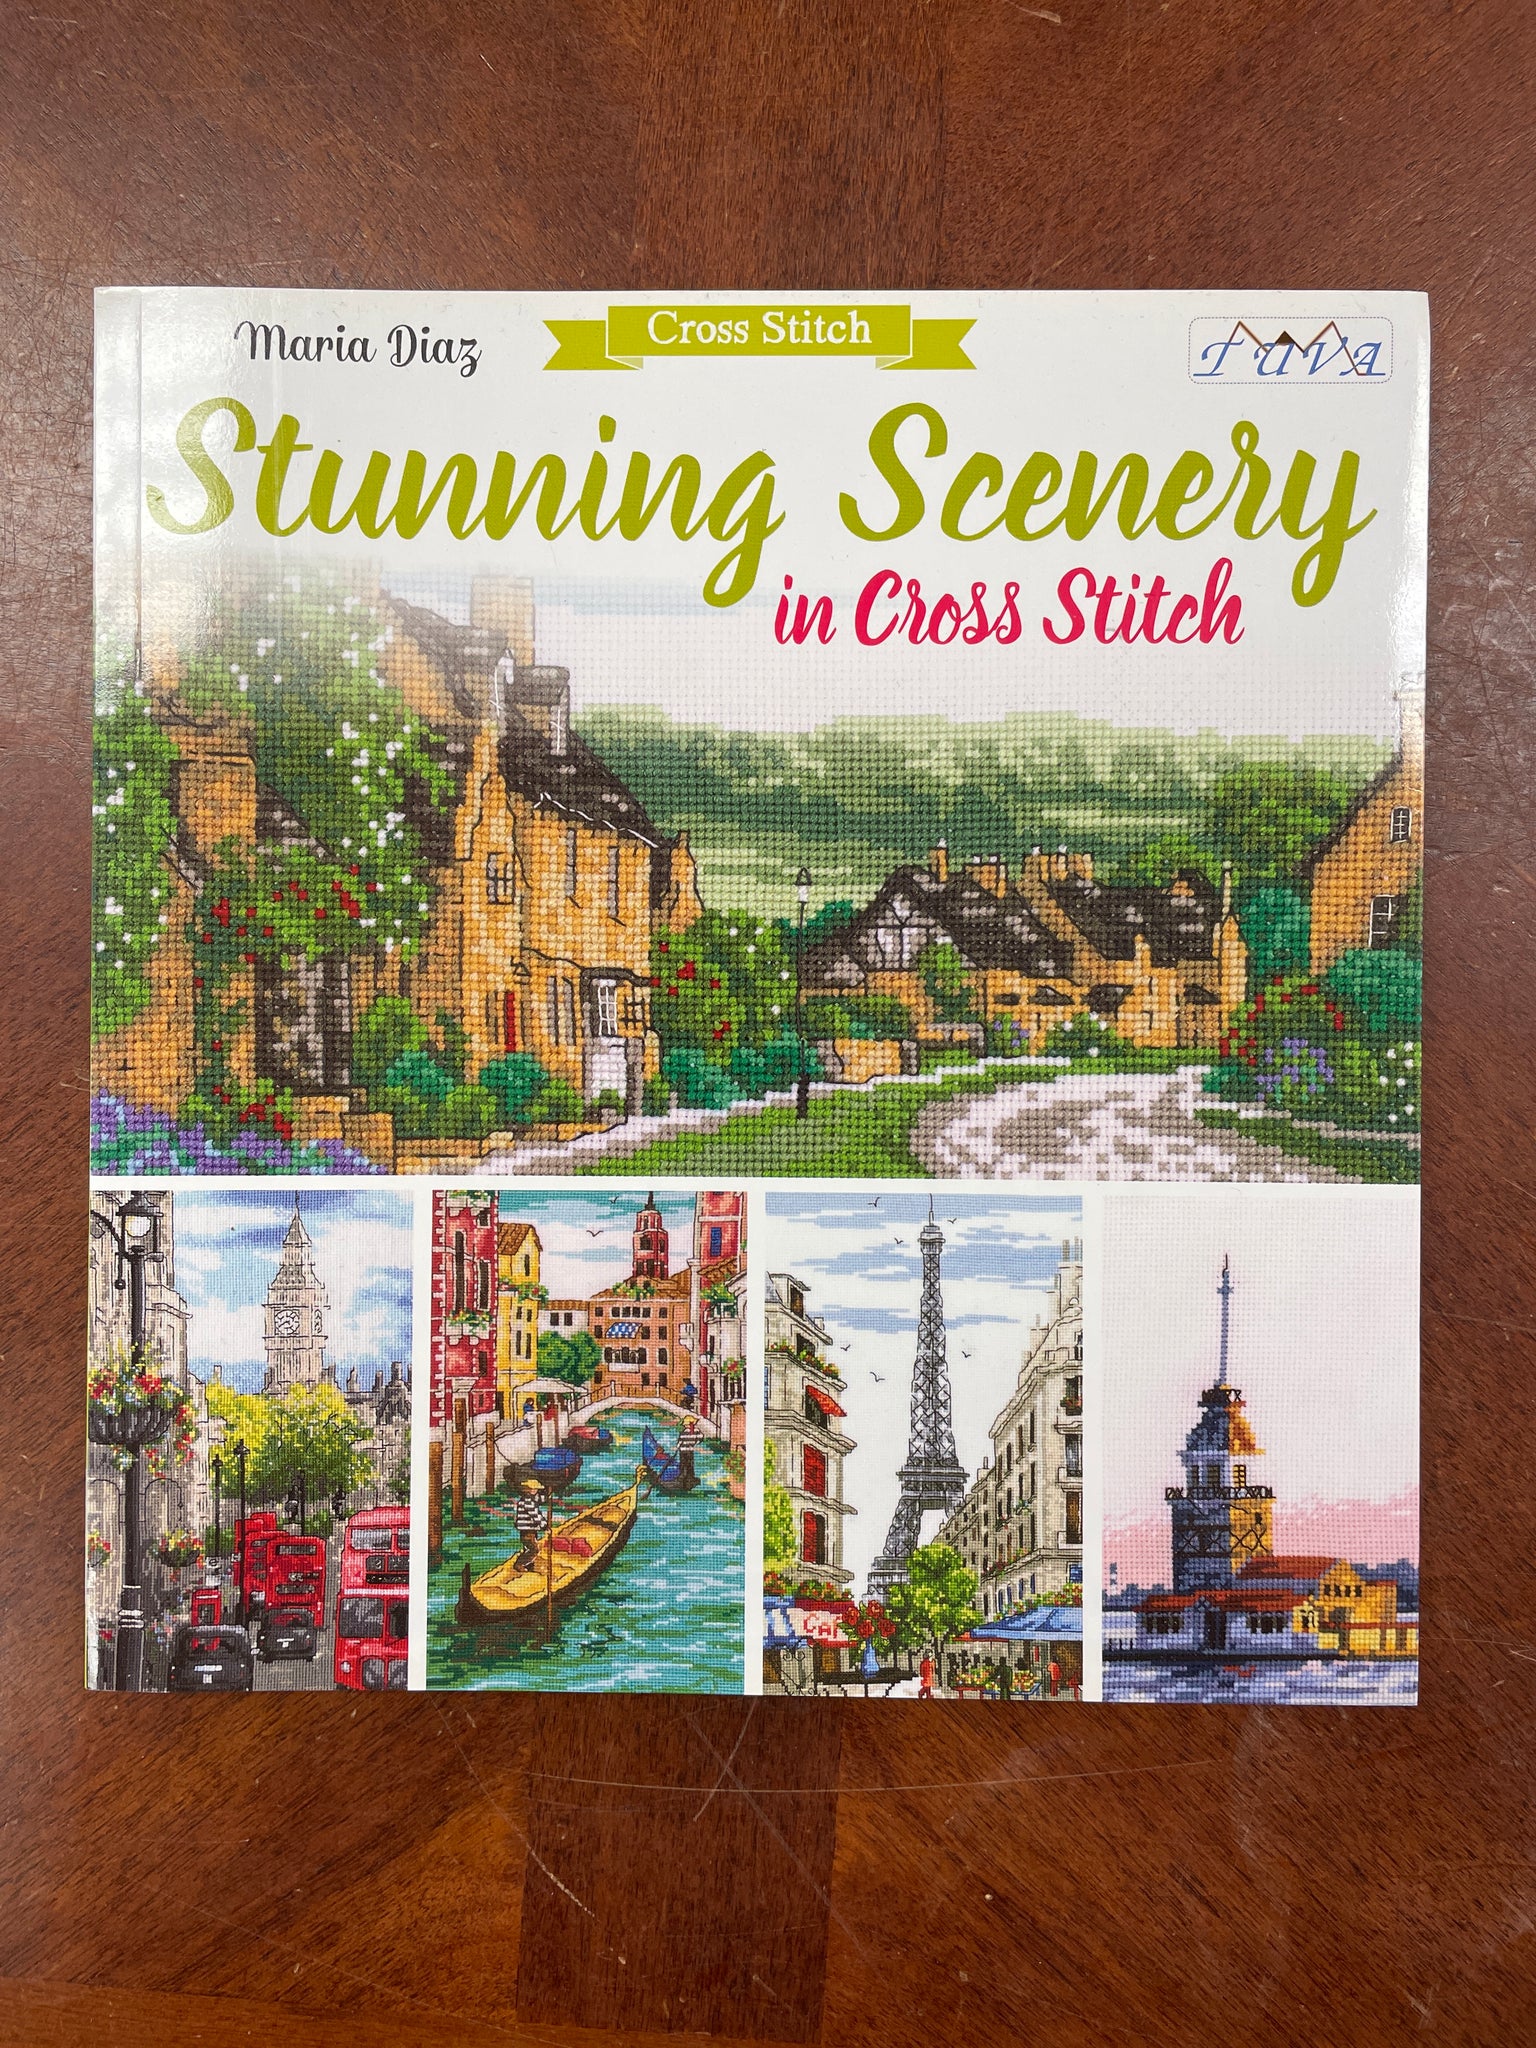 2016 Cross Stitch Book - "Stunning Scenery in Cross Stitch"